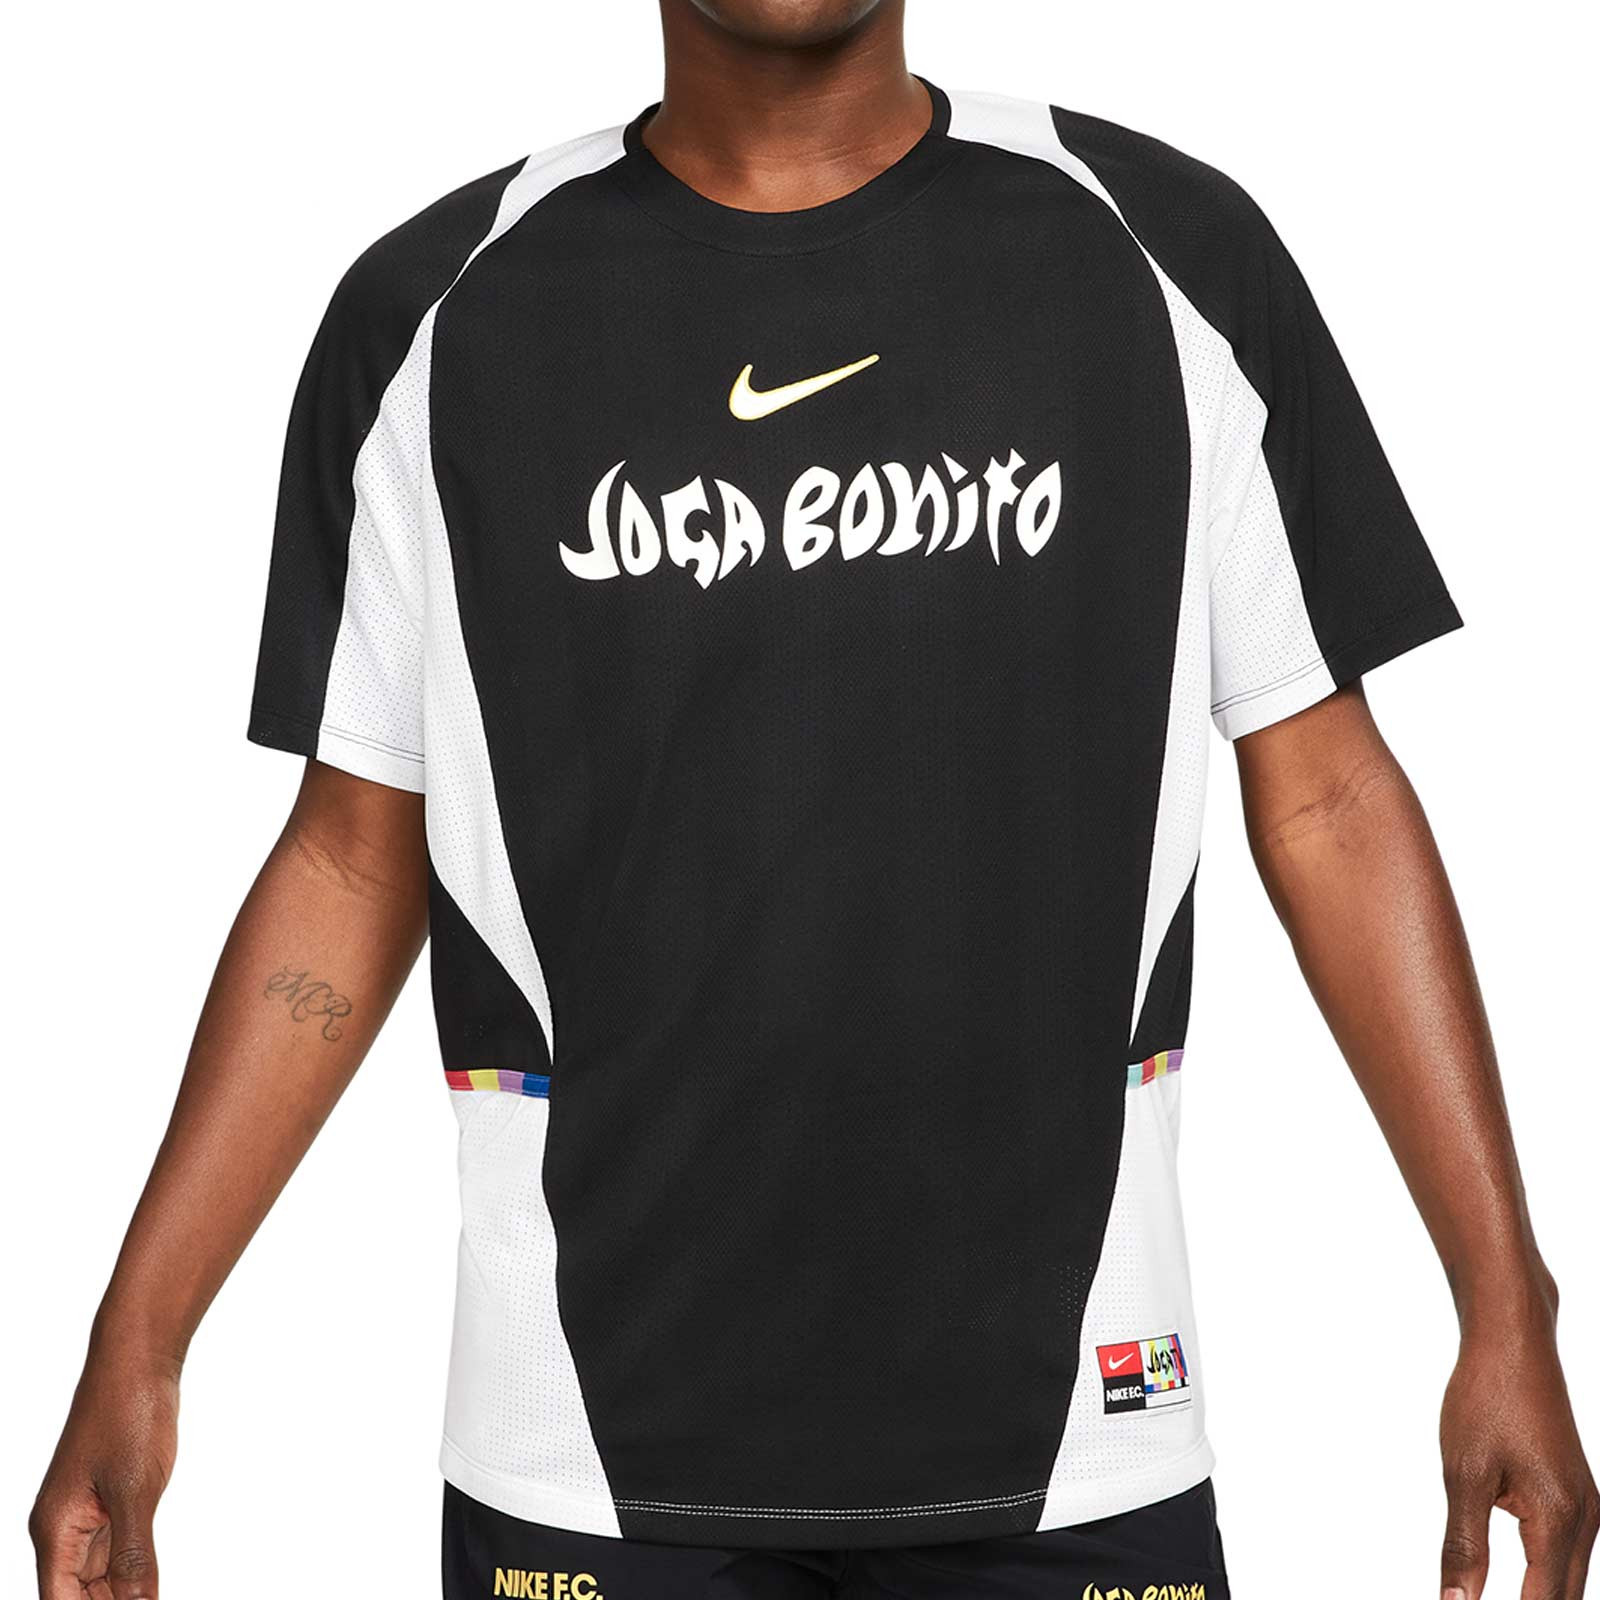 vocal Tender nativo Camiseta Nike FC Home Joga Bonito negra | futbolmania